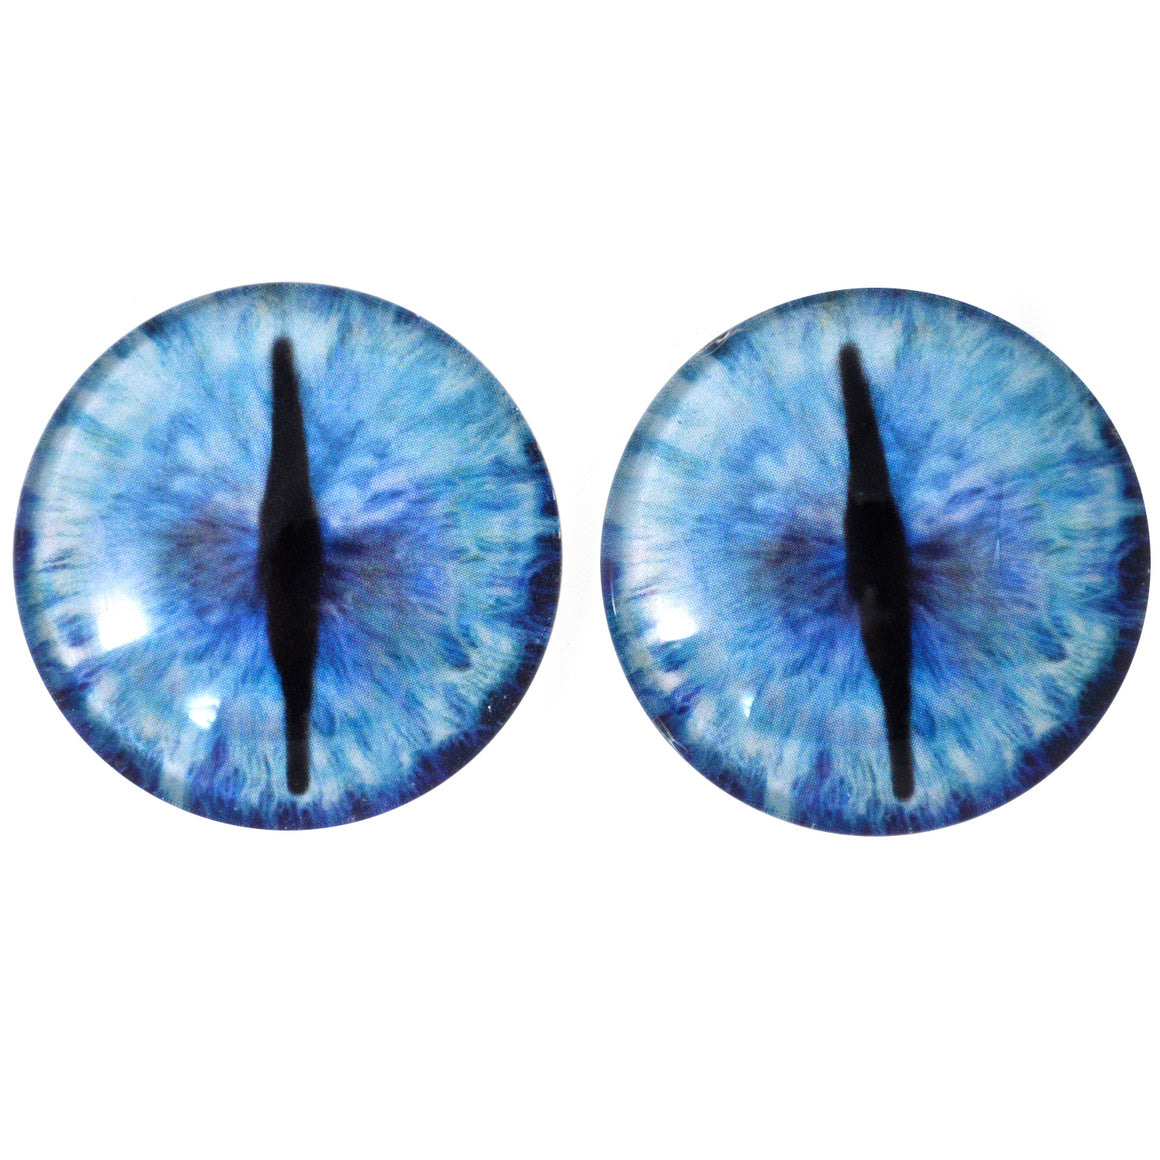 50mm Blue Dragon Glass Eyes Large 2 Inch Fantasy Eyes Handmade Glass Eyes